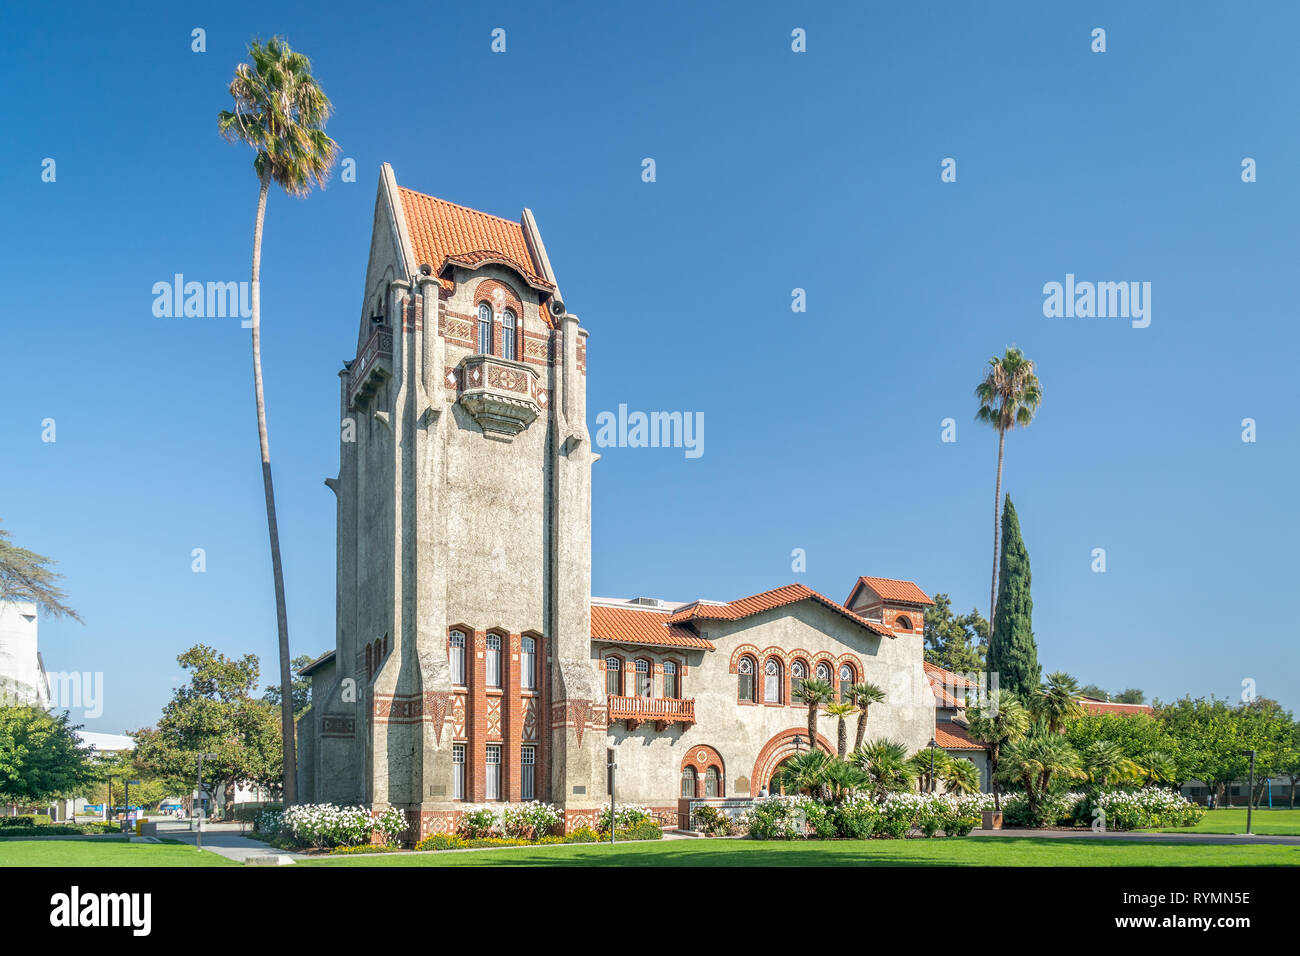 SAN JOSE, CA/USA - OCTOBER 21, 2018: Tower Hall and Washington Square on the campus of San Jose State University. Stock Photo